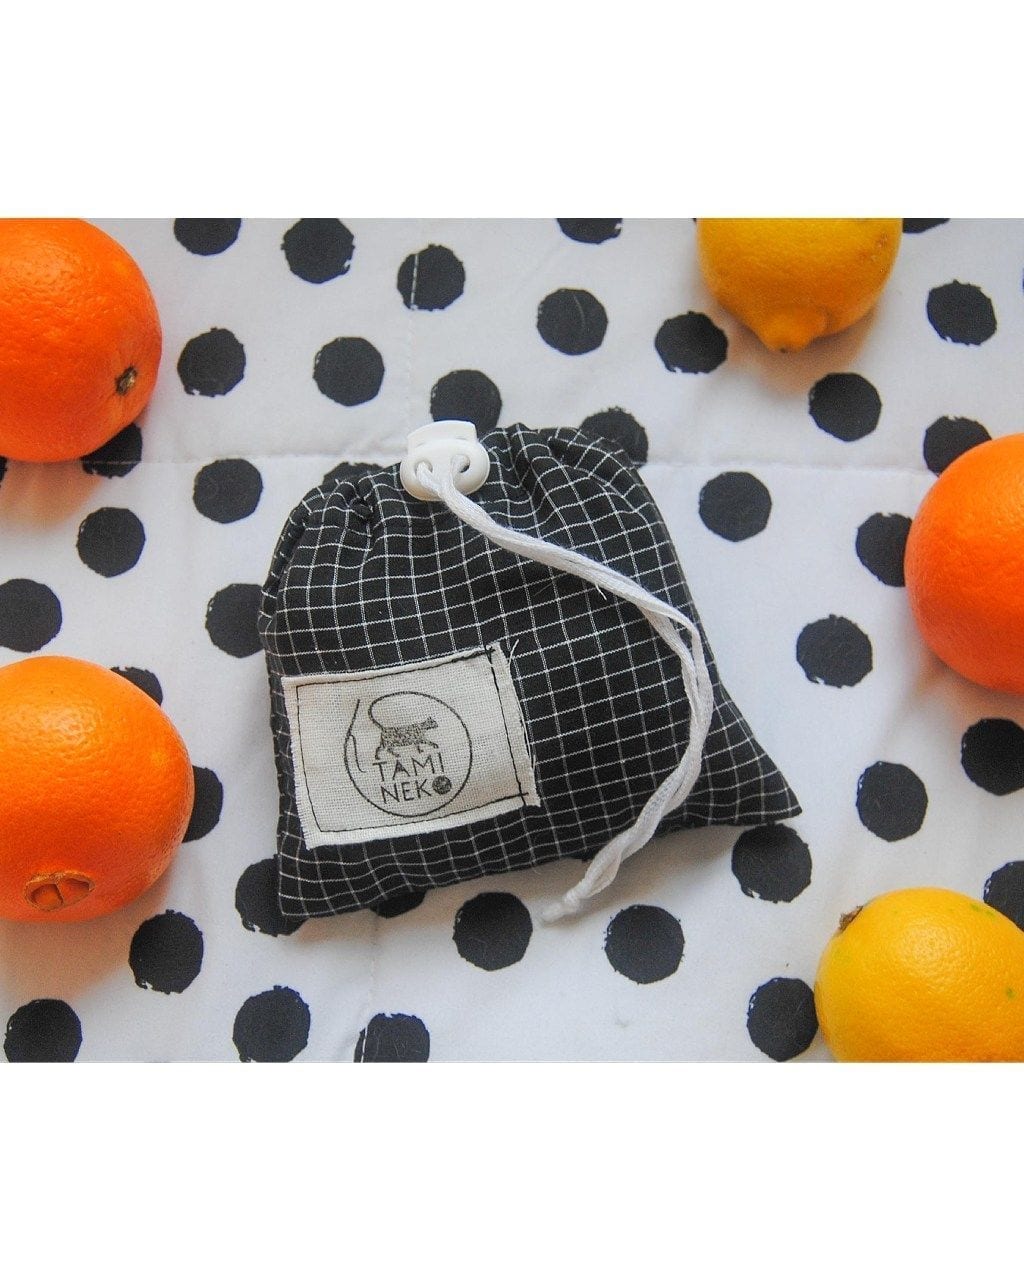 TamiNeko - Bolsas reutilizables para alimentos - Handmade reusable food bags for groceries black